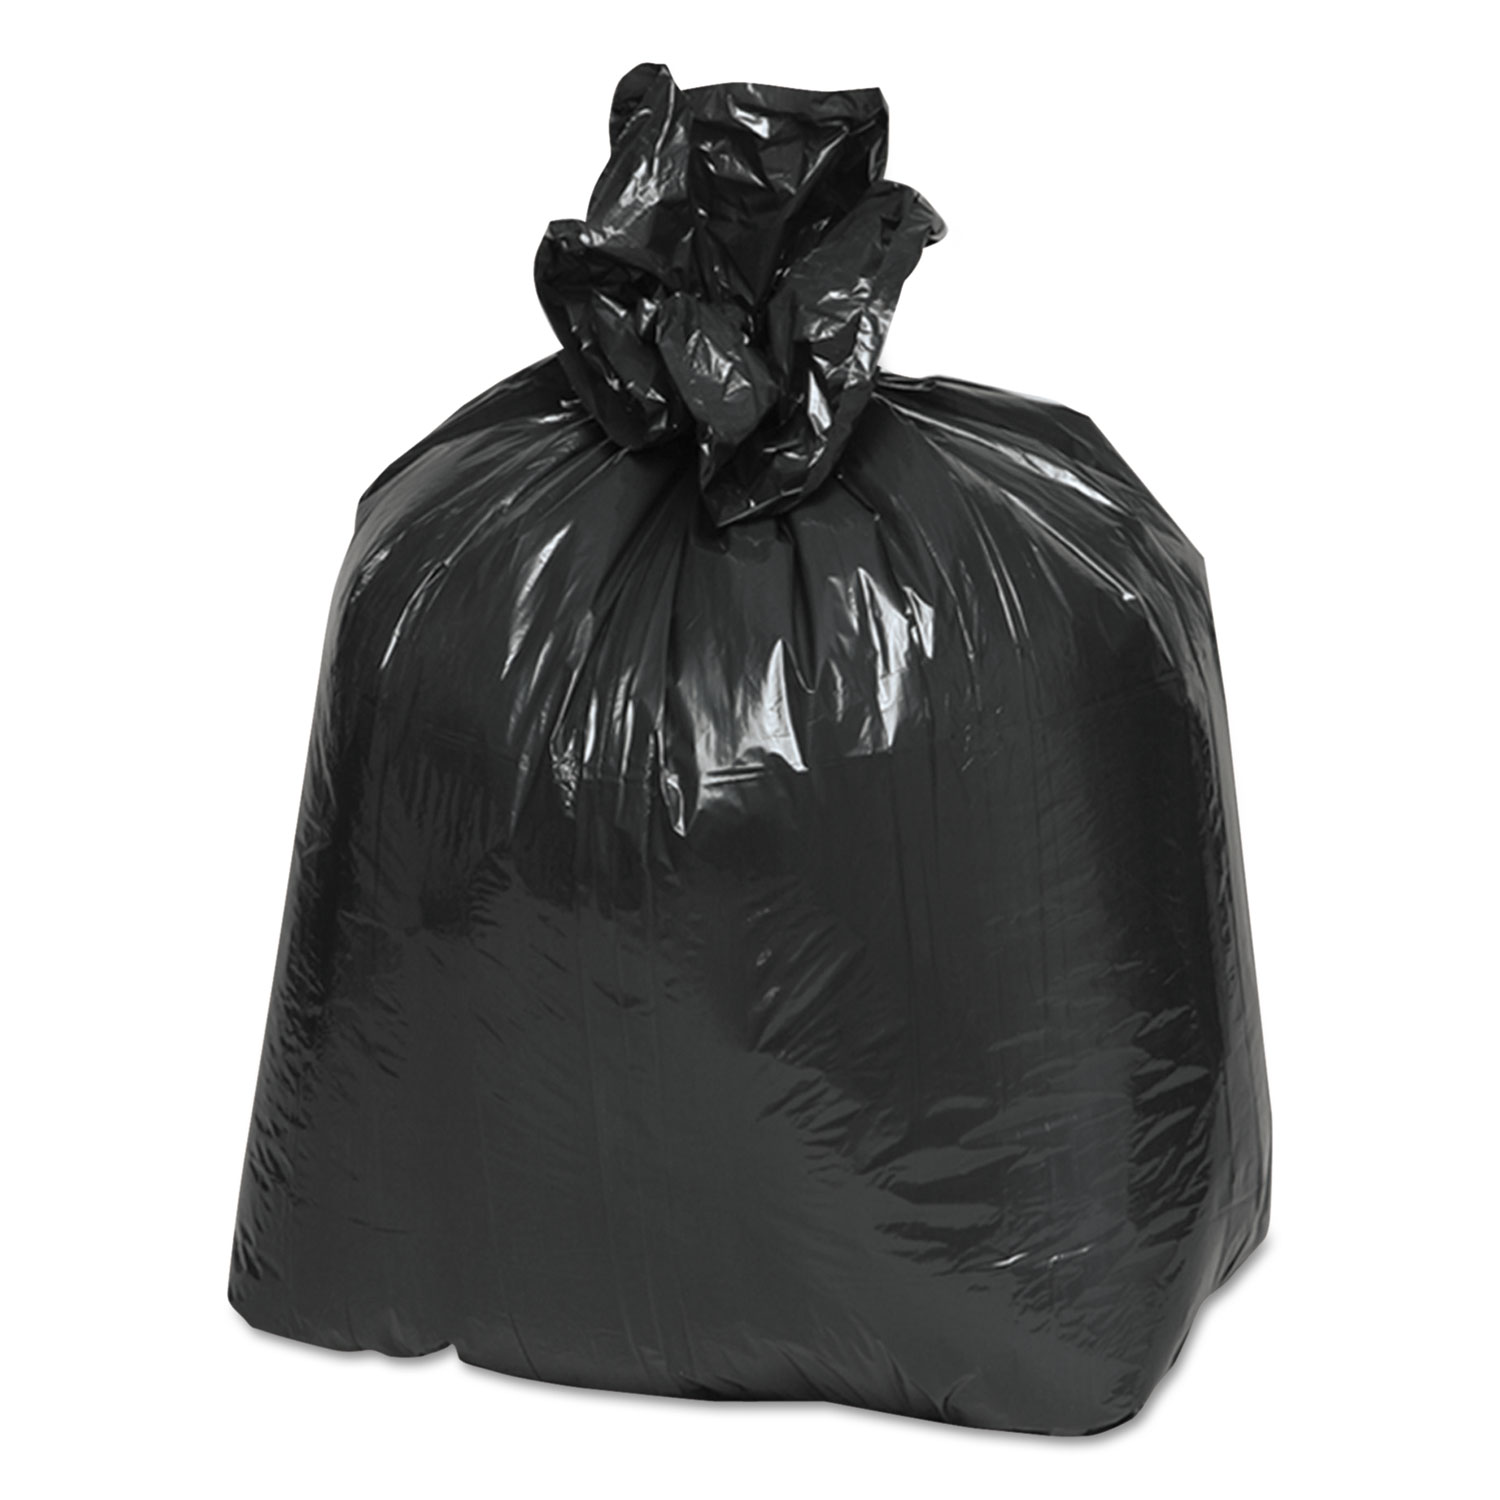 Earthsense Recycled Star Bottom Trash Bags, 55-60 gal, Black, 100-count